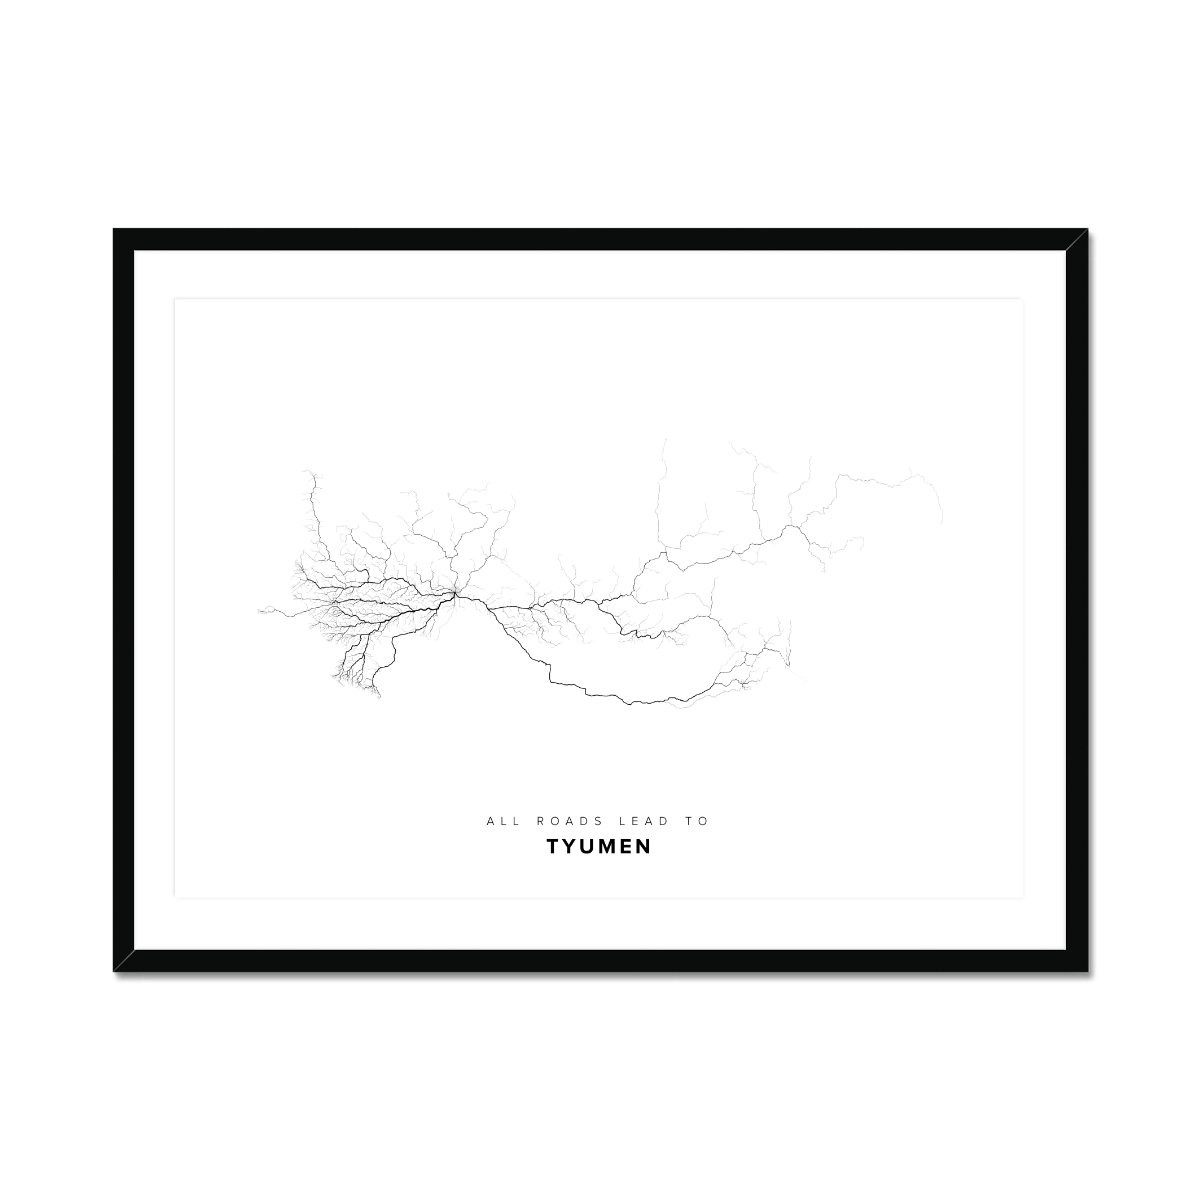 All roads lead to Tyumen (Russian Federation) Fine Art Map Print